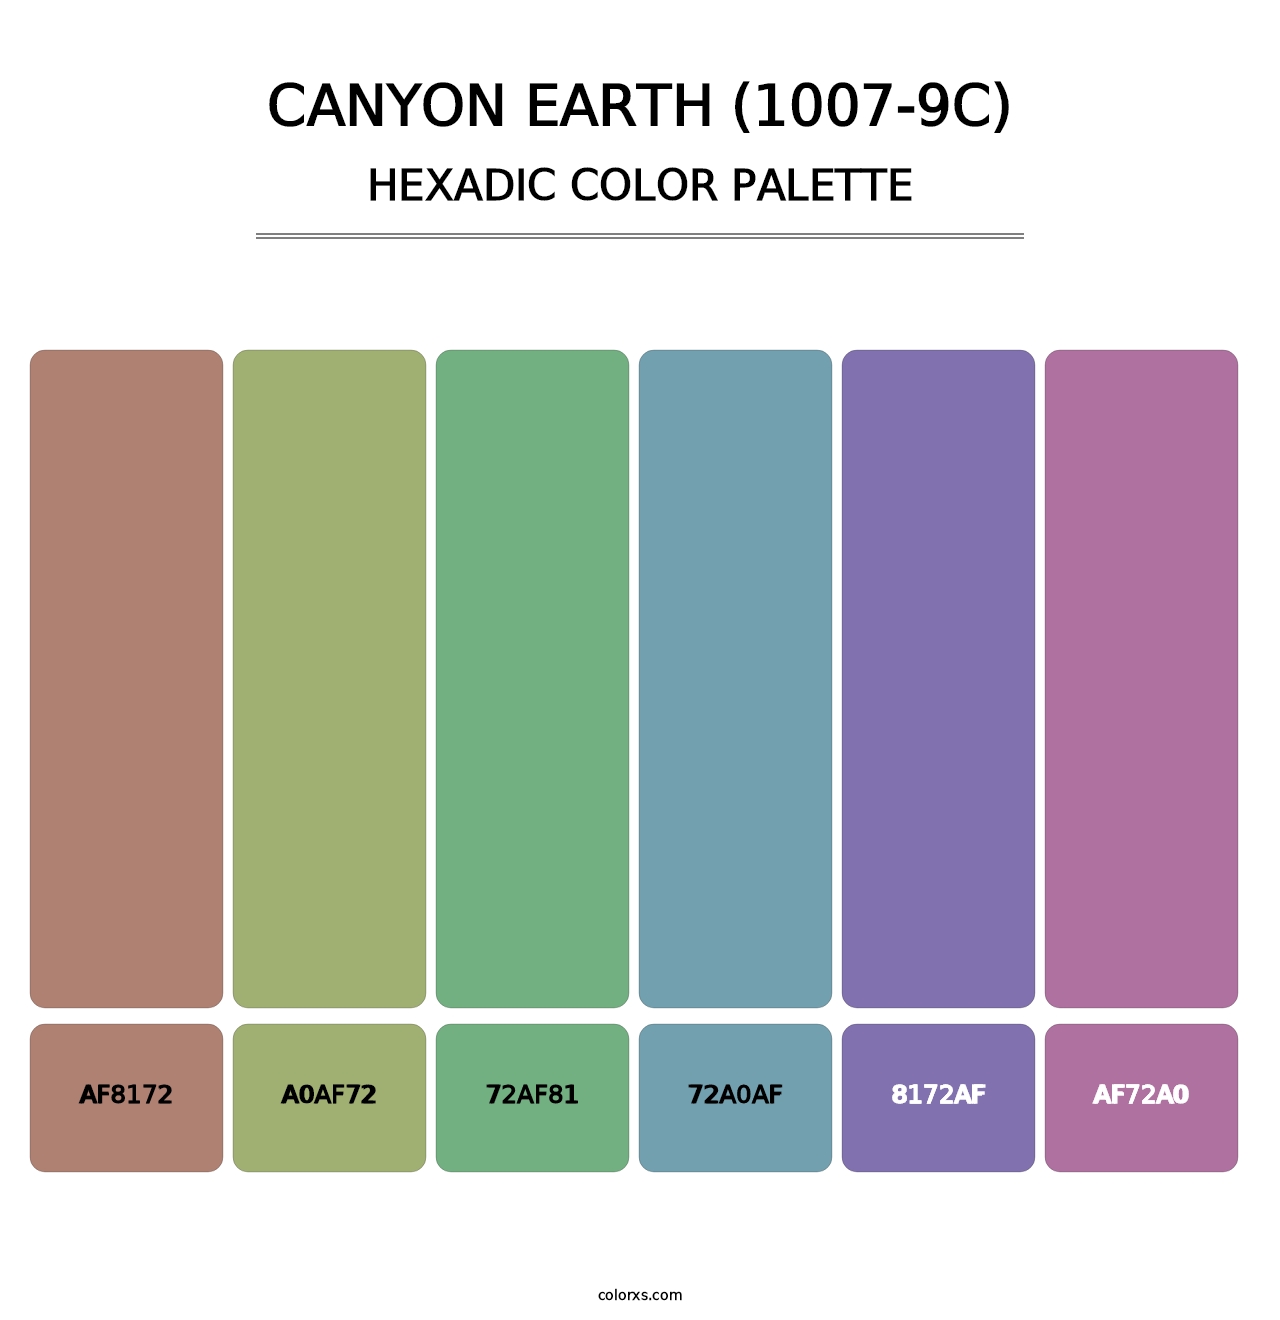 Canyon Earth (1007-9C) - Hexadic Color Palette